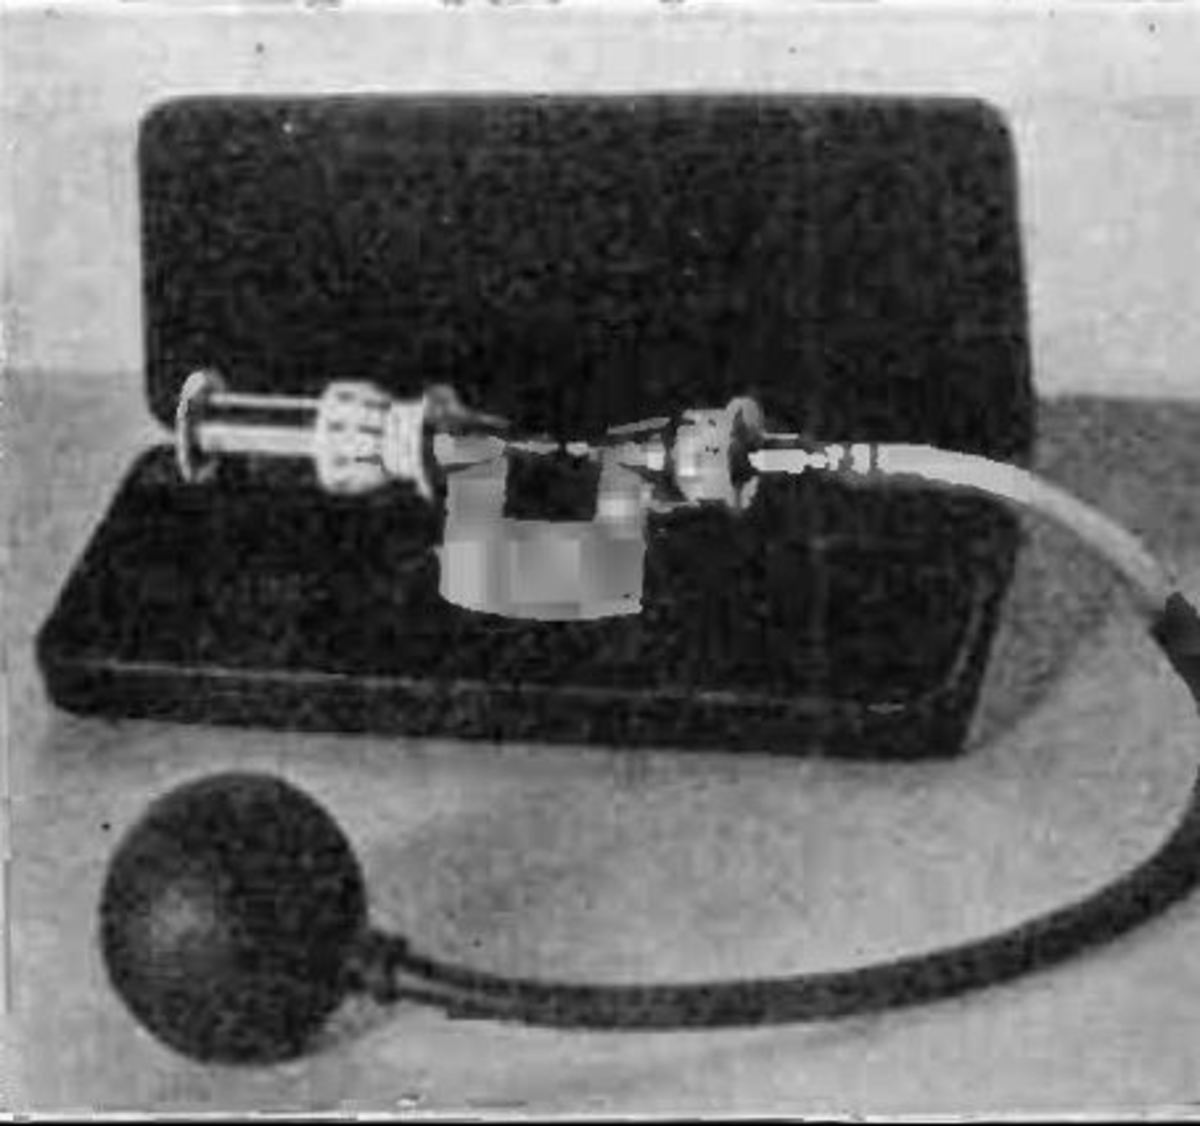 Galton whistle, the first "dog whistle"